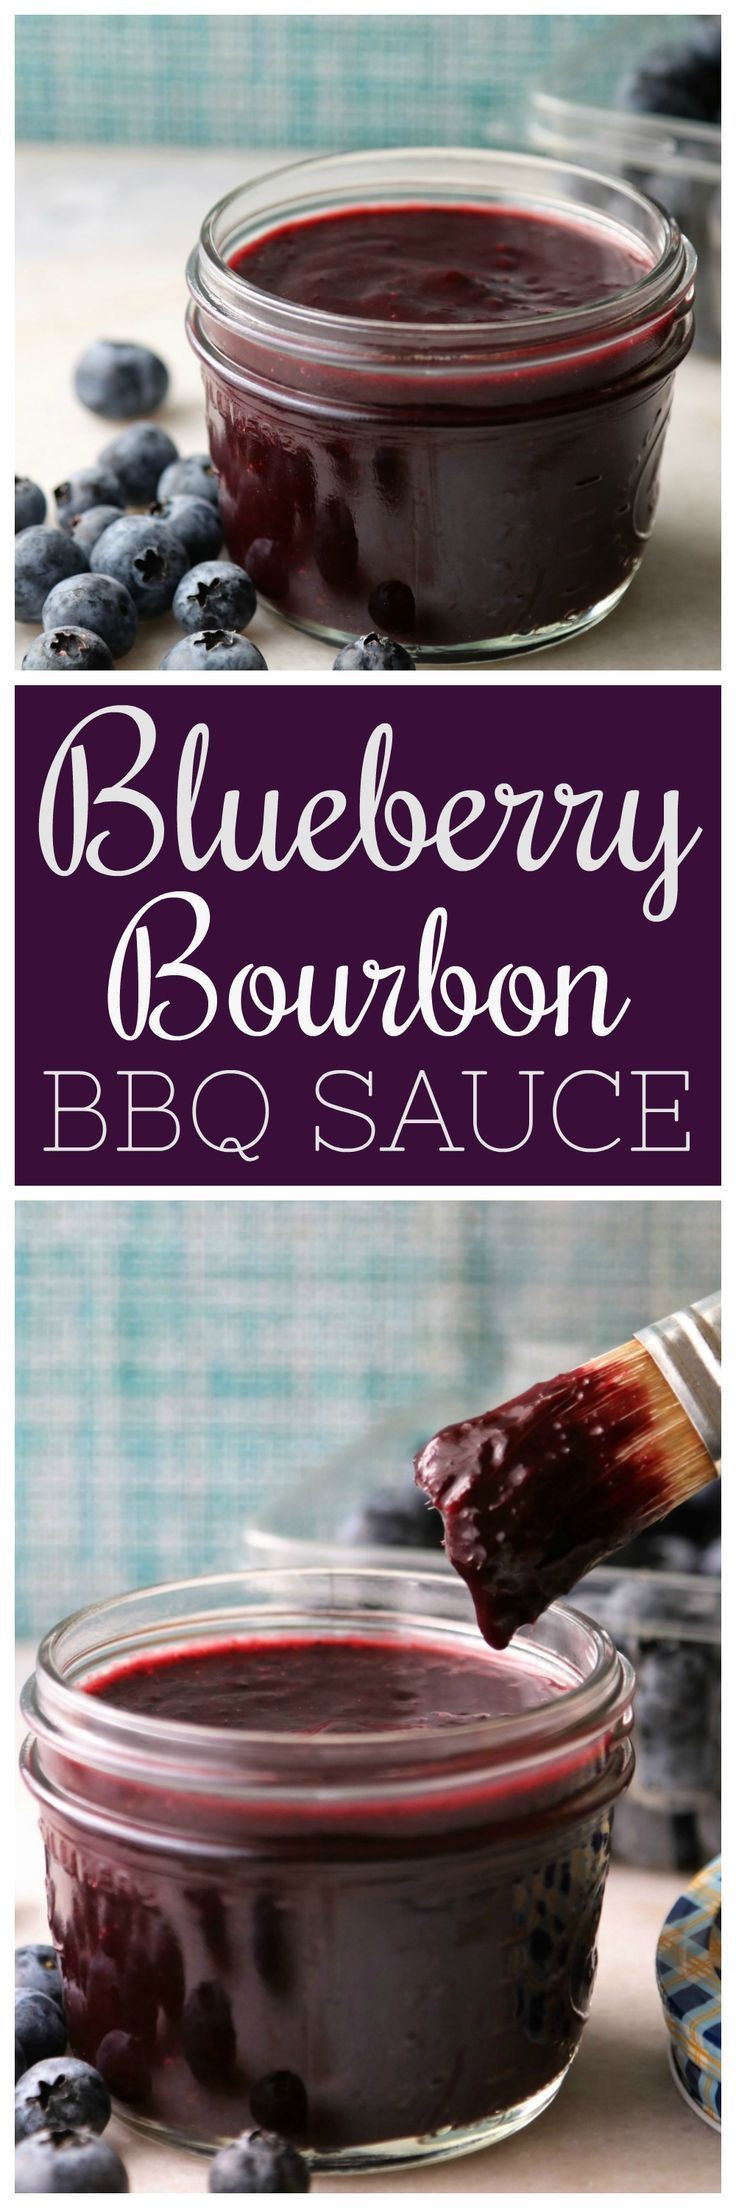 Blueberry Bbq Sauce Recipe
 Blueberry Bourbon BBQ Sauce